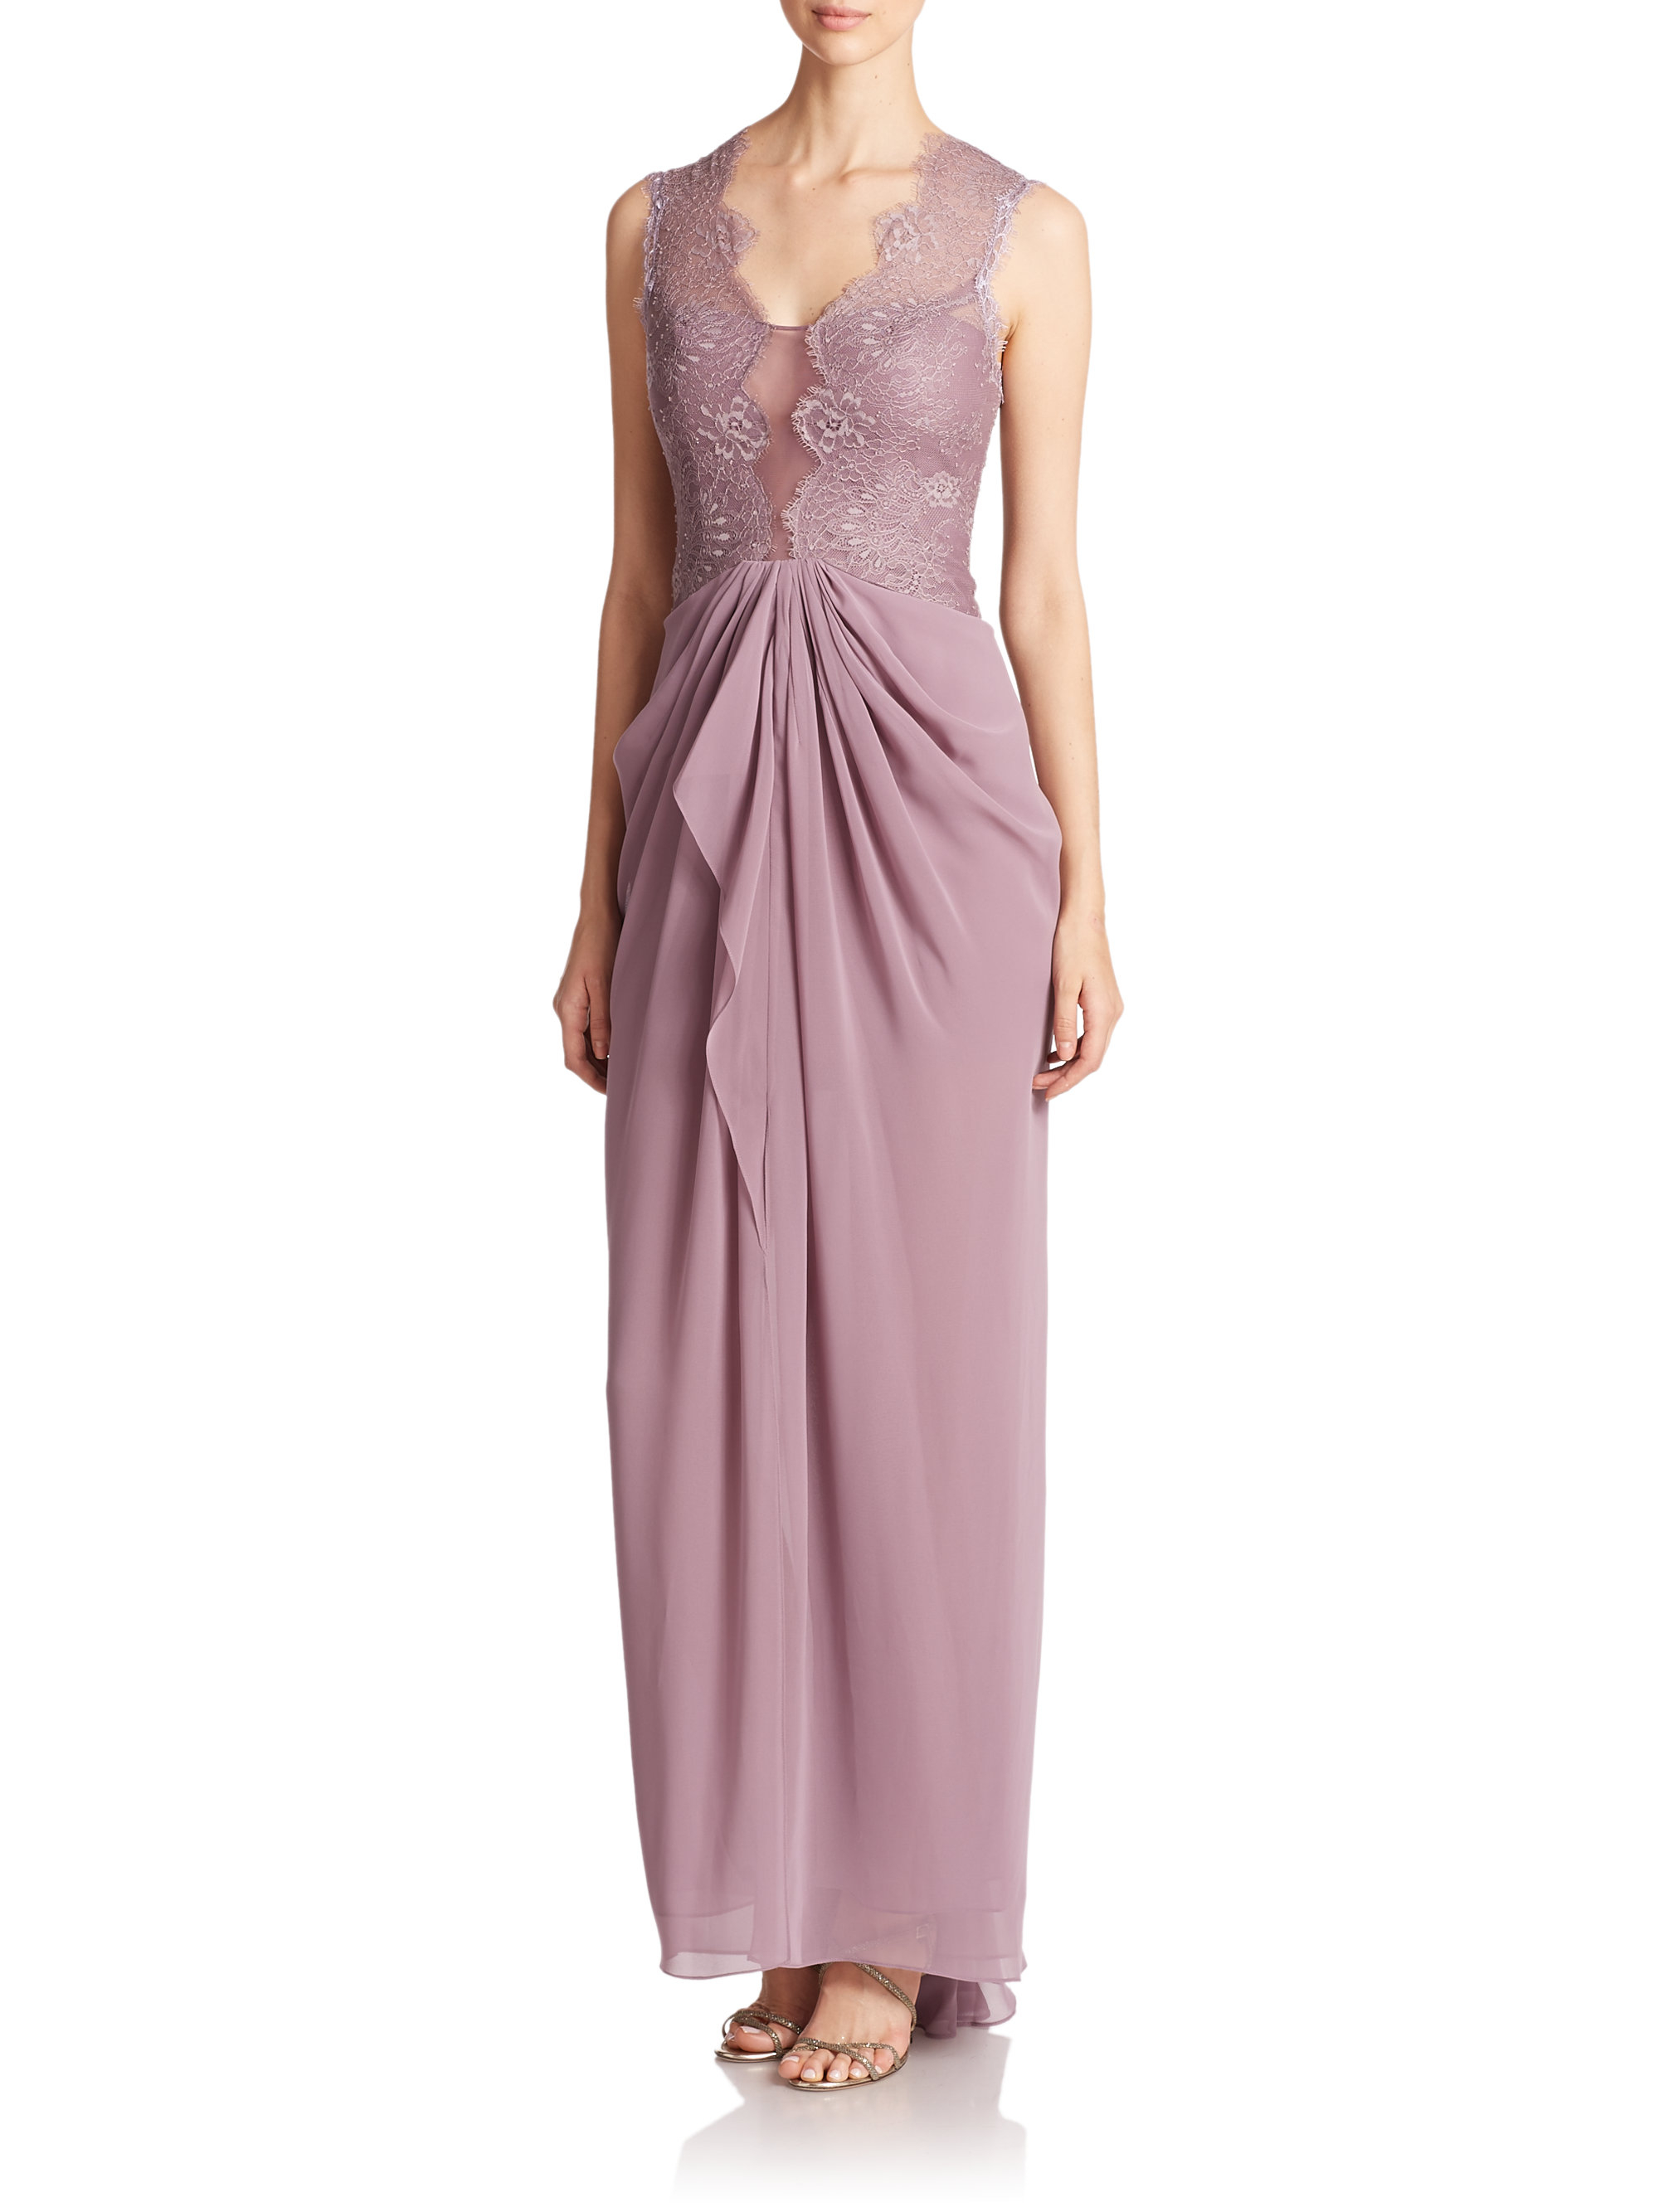 Lyst - Bcbgmaxazria Brandy Lace-Bodice Gown in Purple2000 x 2667